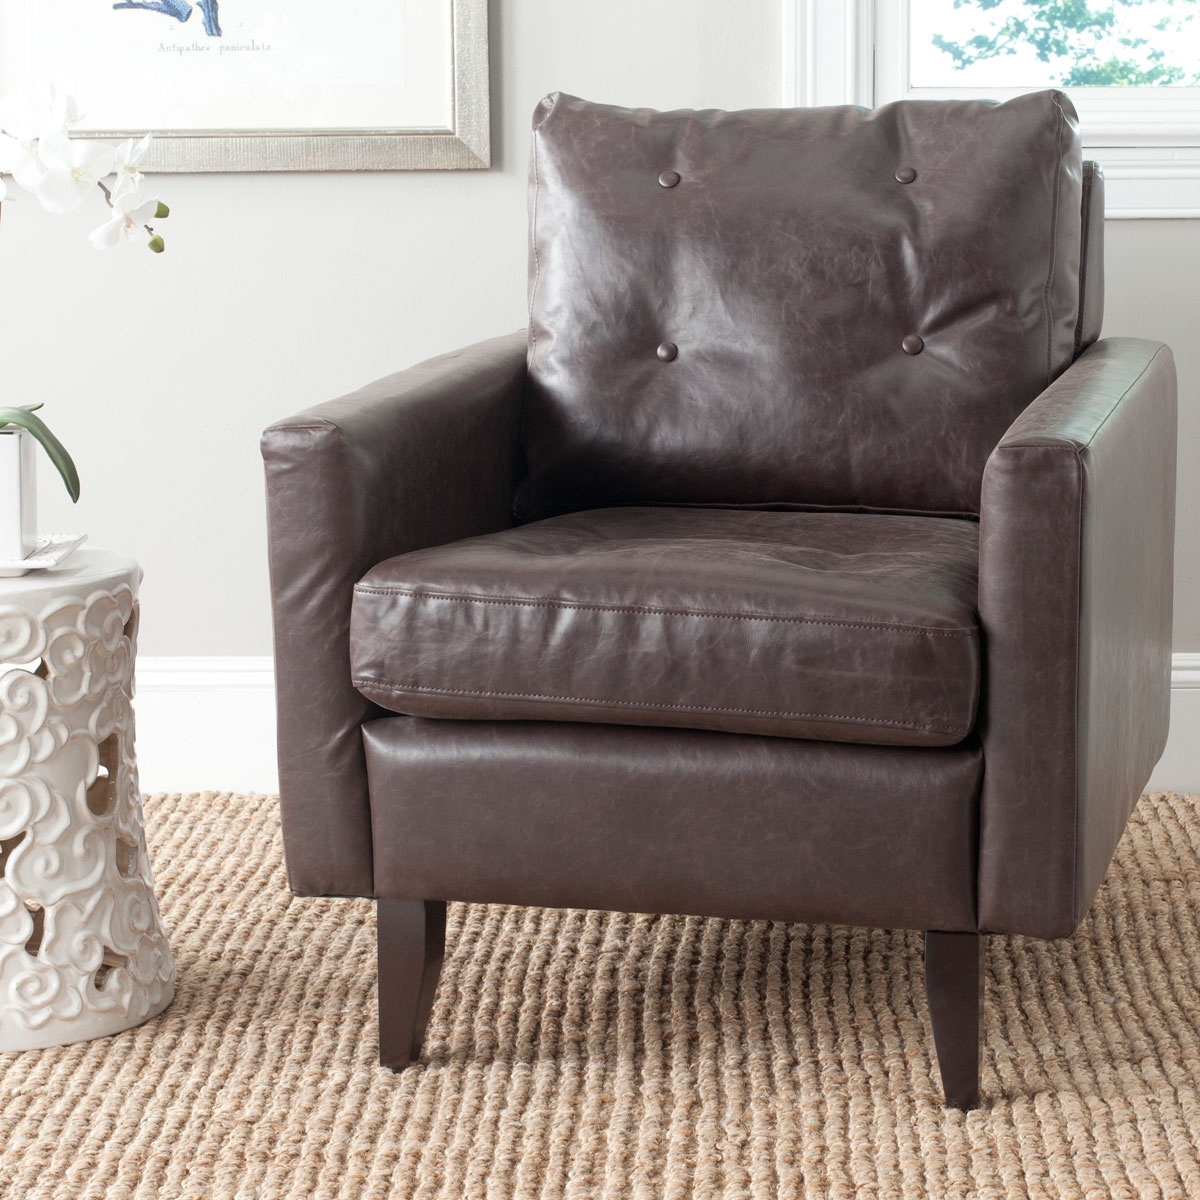 Mid Century Modern Caleb Club Chair - Antique Brown/Espresso - Arlo Home - Image 1